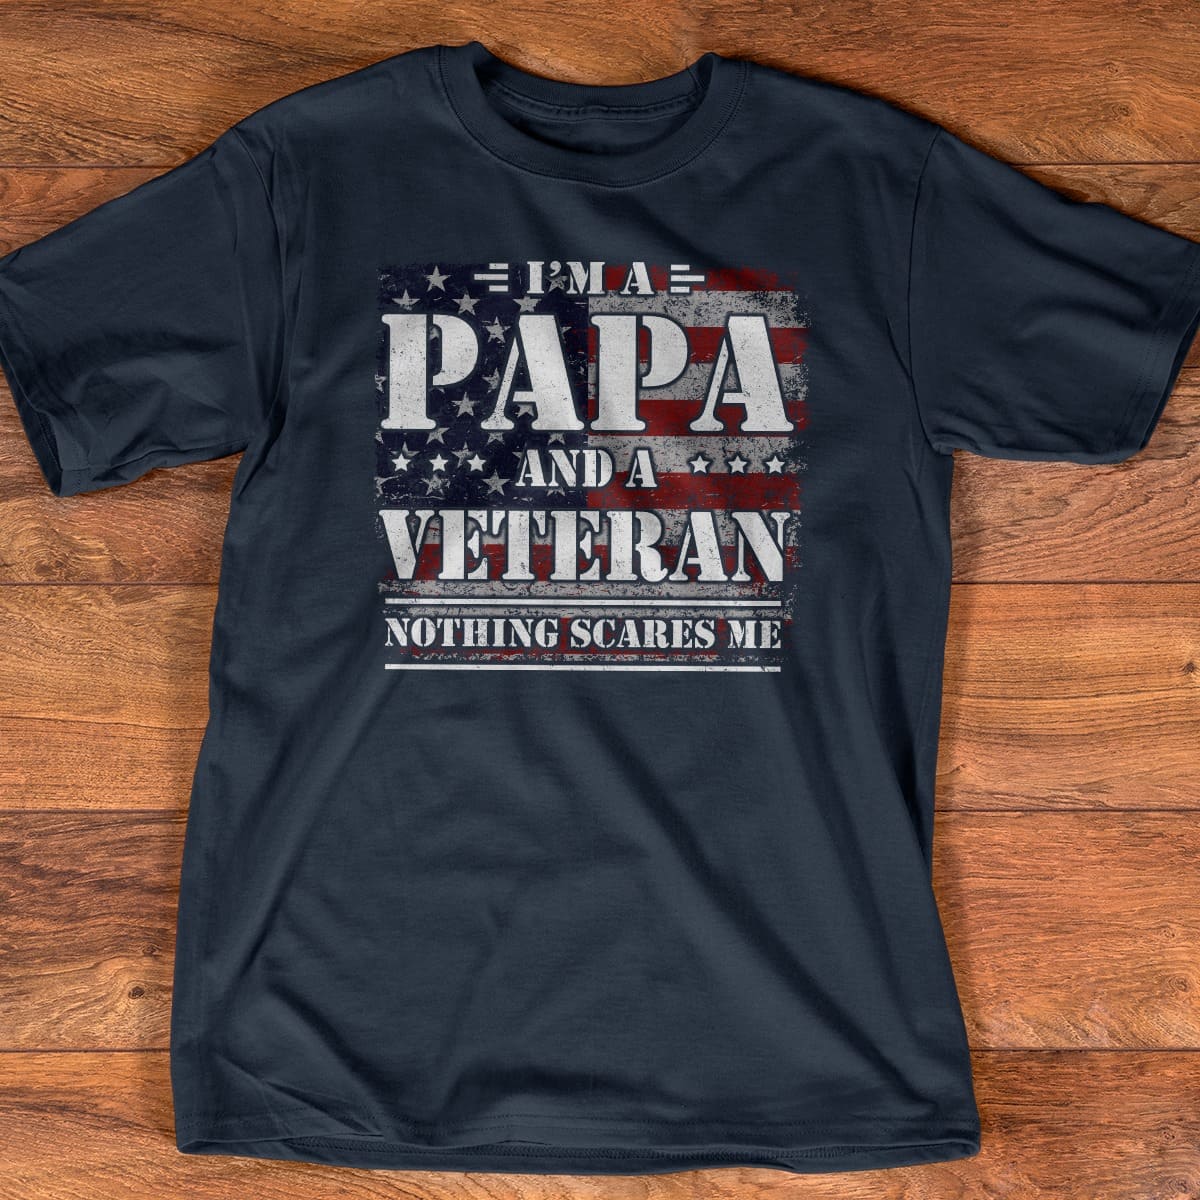 I'm a papa and a veteran nothing scares me - Grandpa the veterans, American veterans T-shirt